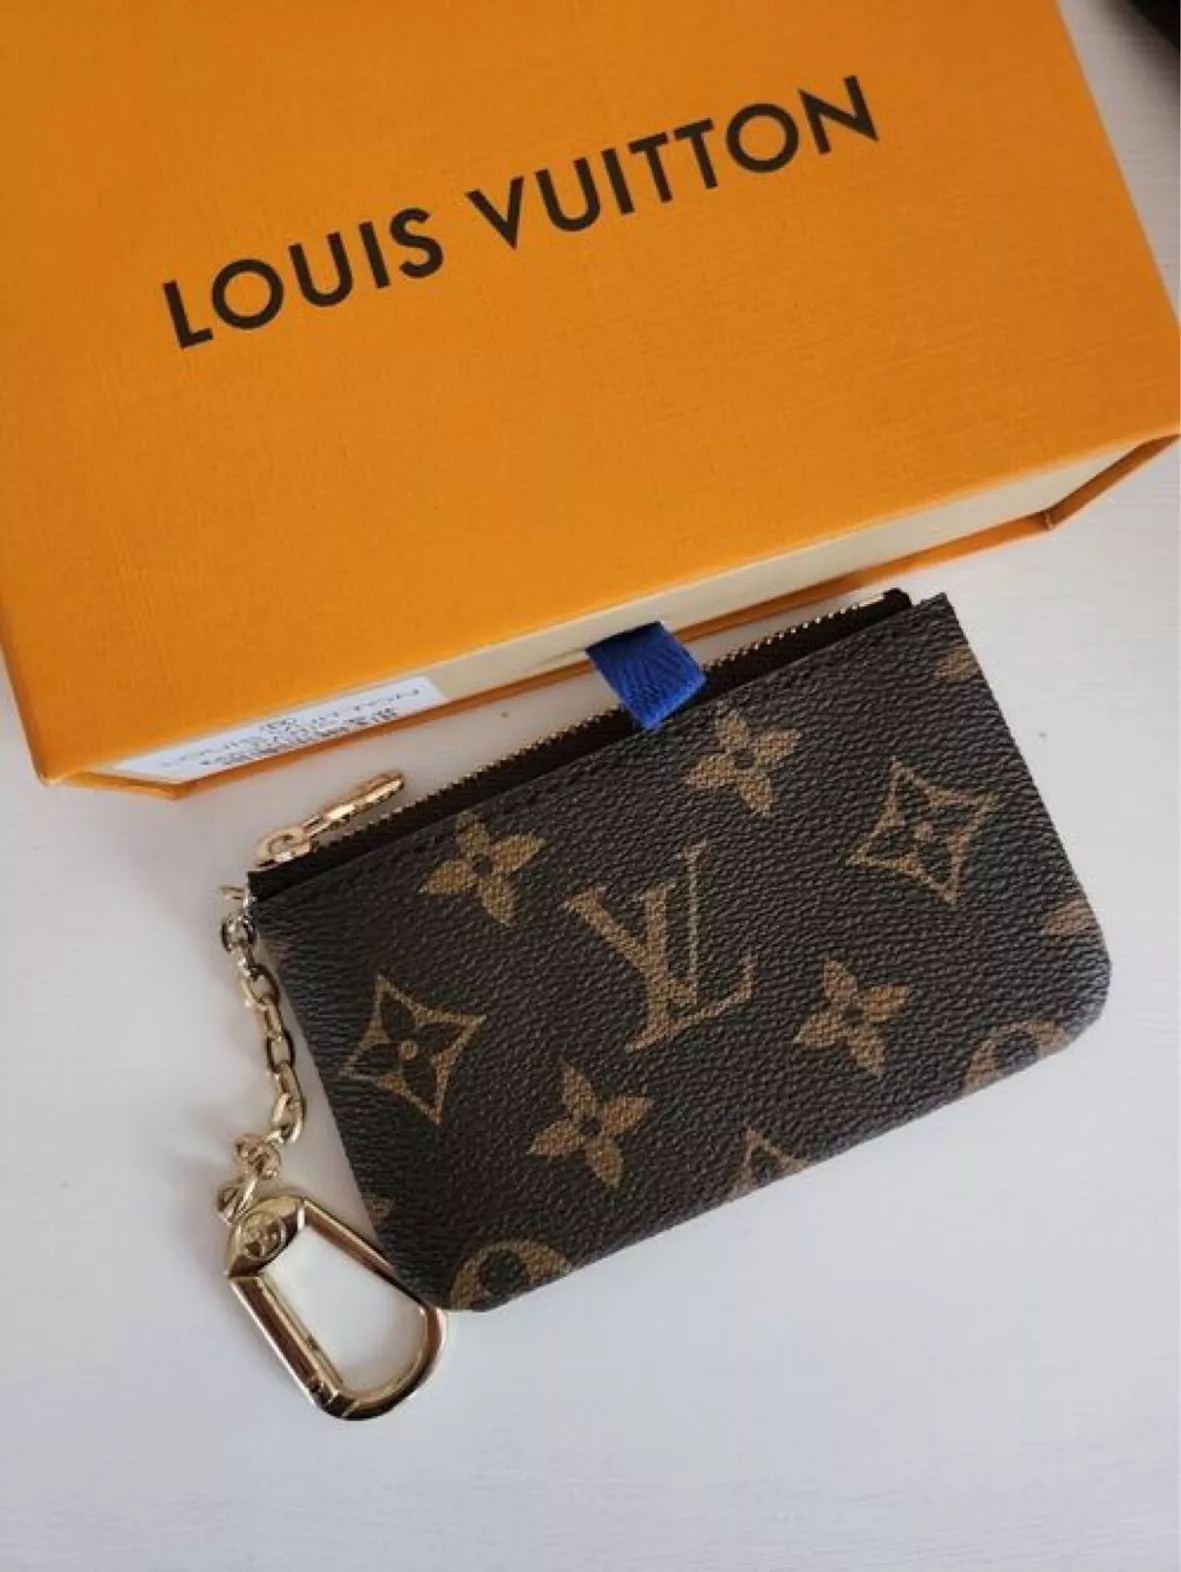 DHGATE LOUIS VUITTON HAUL  Louis Vuitton Key Pouch